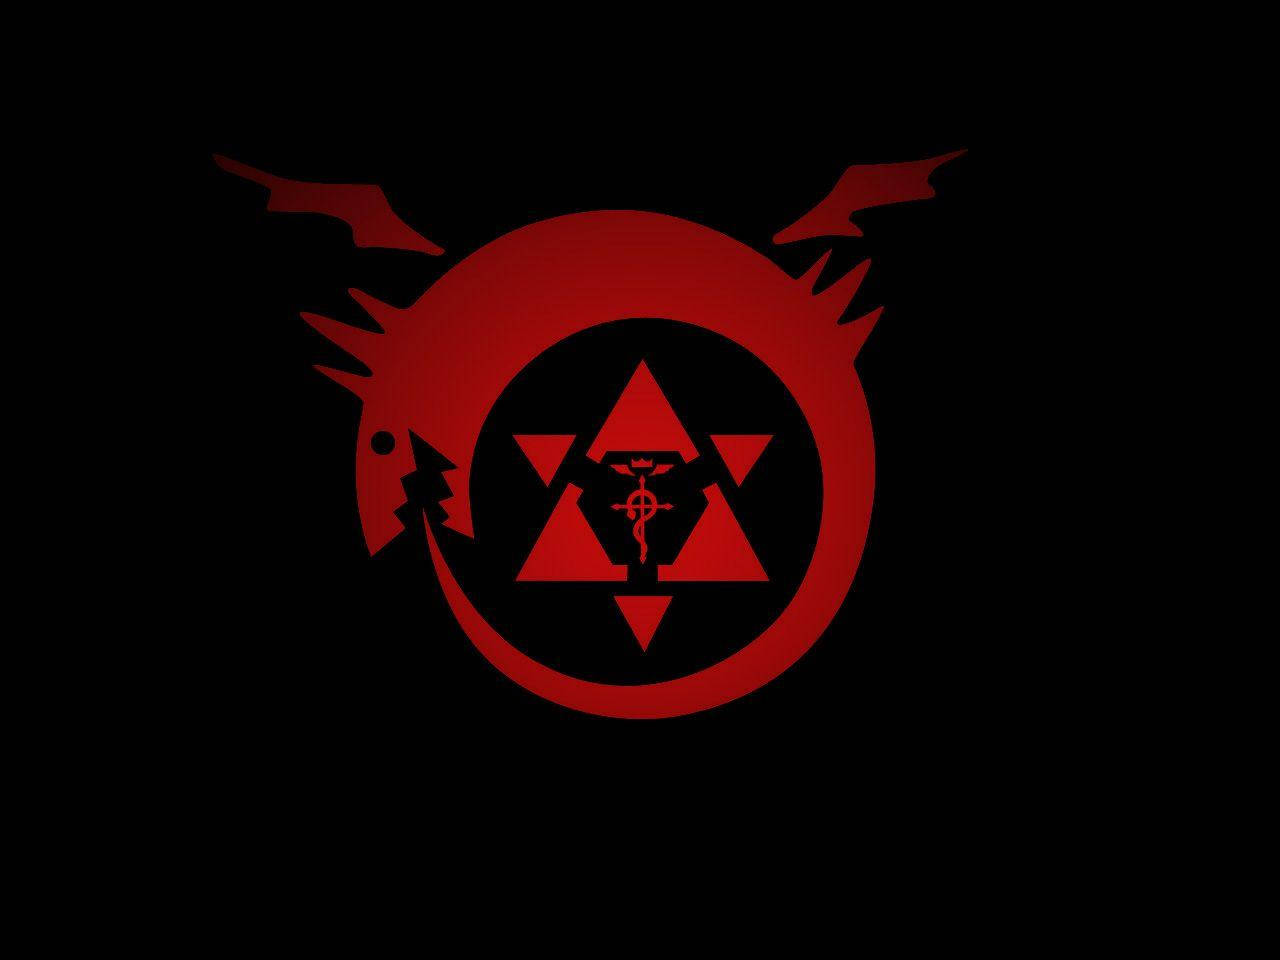 Anime Symbols Full Metal Alchemist Homunculi Black And Red Wallpaper